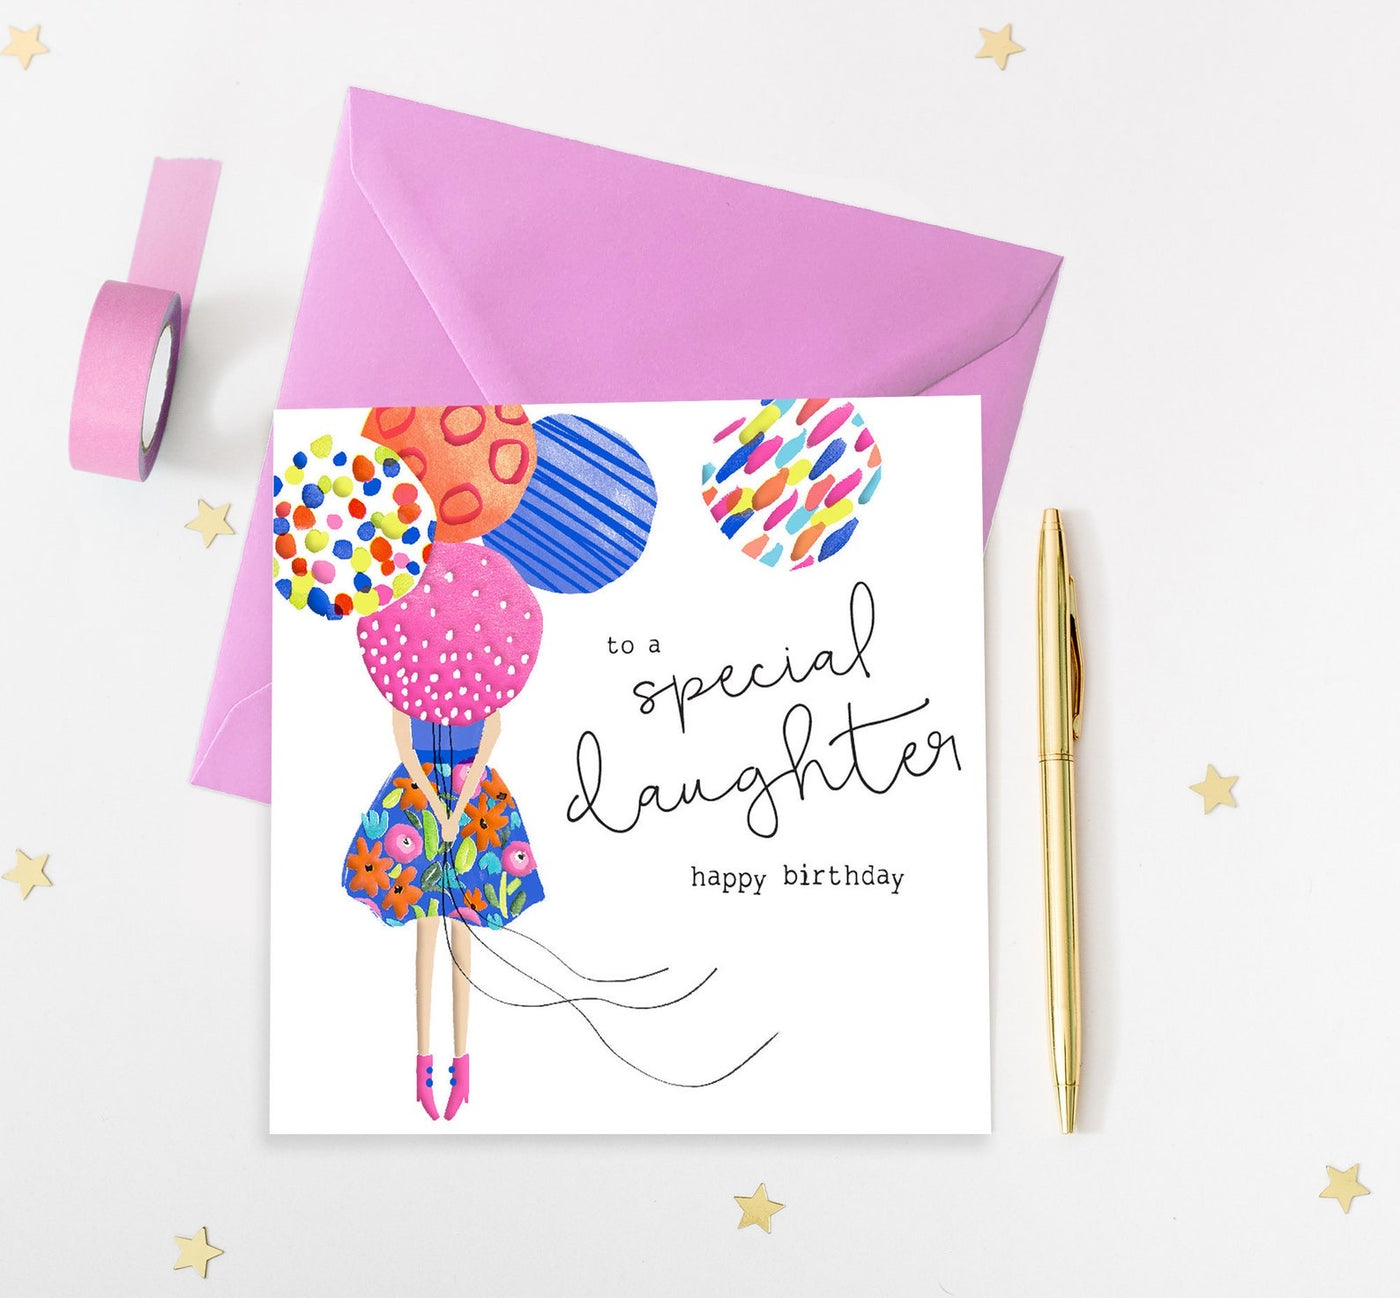 Rosanna Rossi Special Daughter Balloons Birthday Card